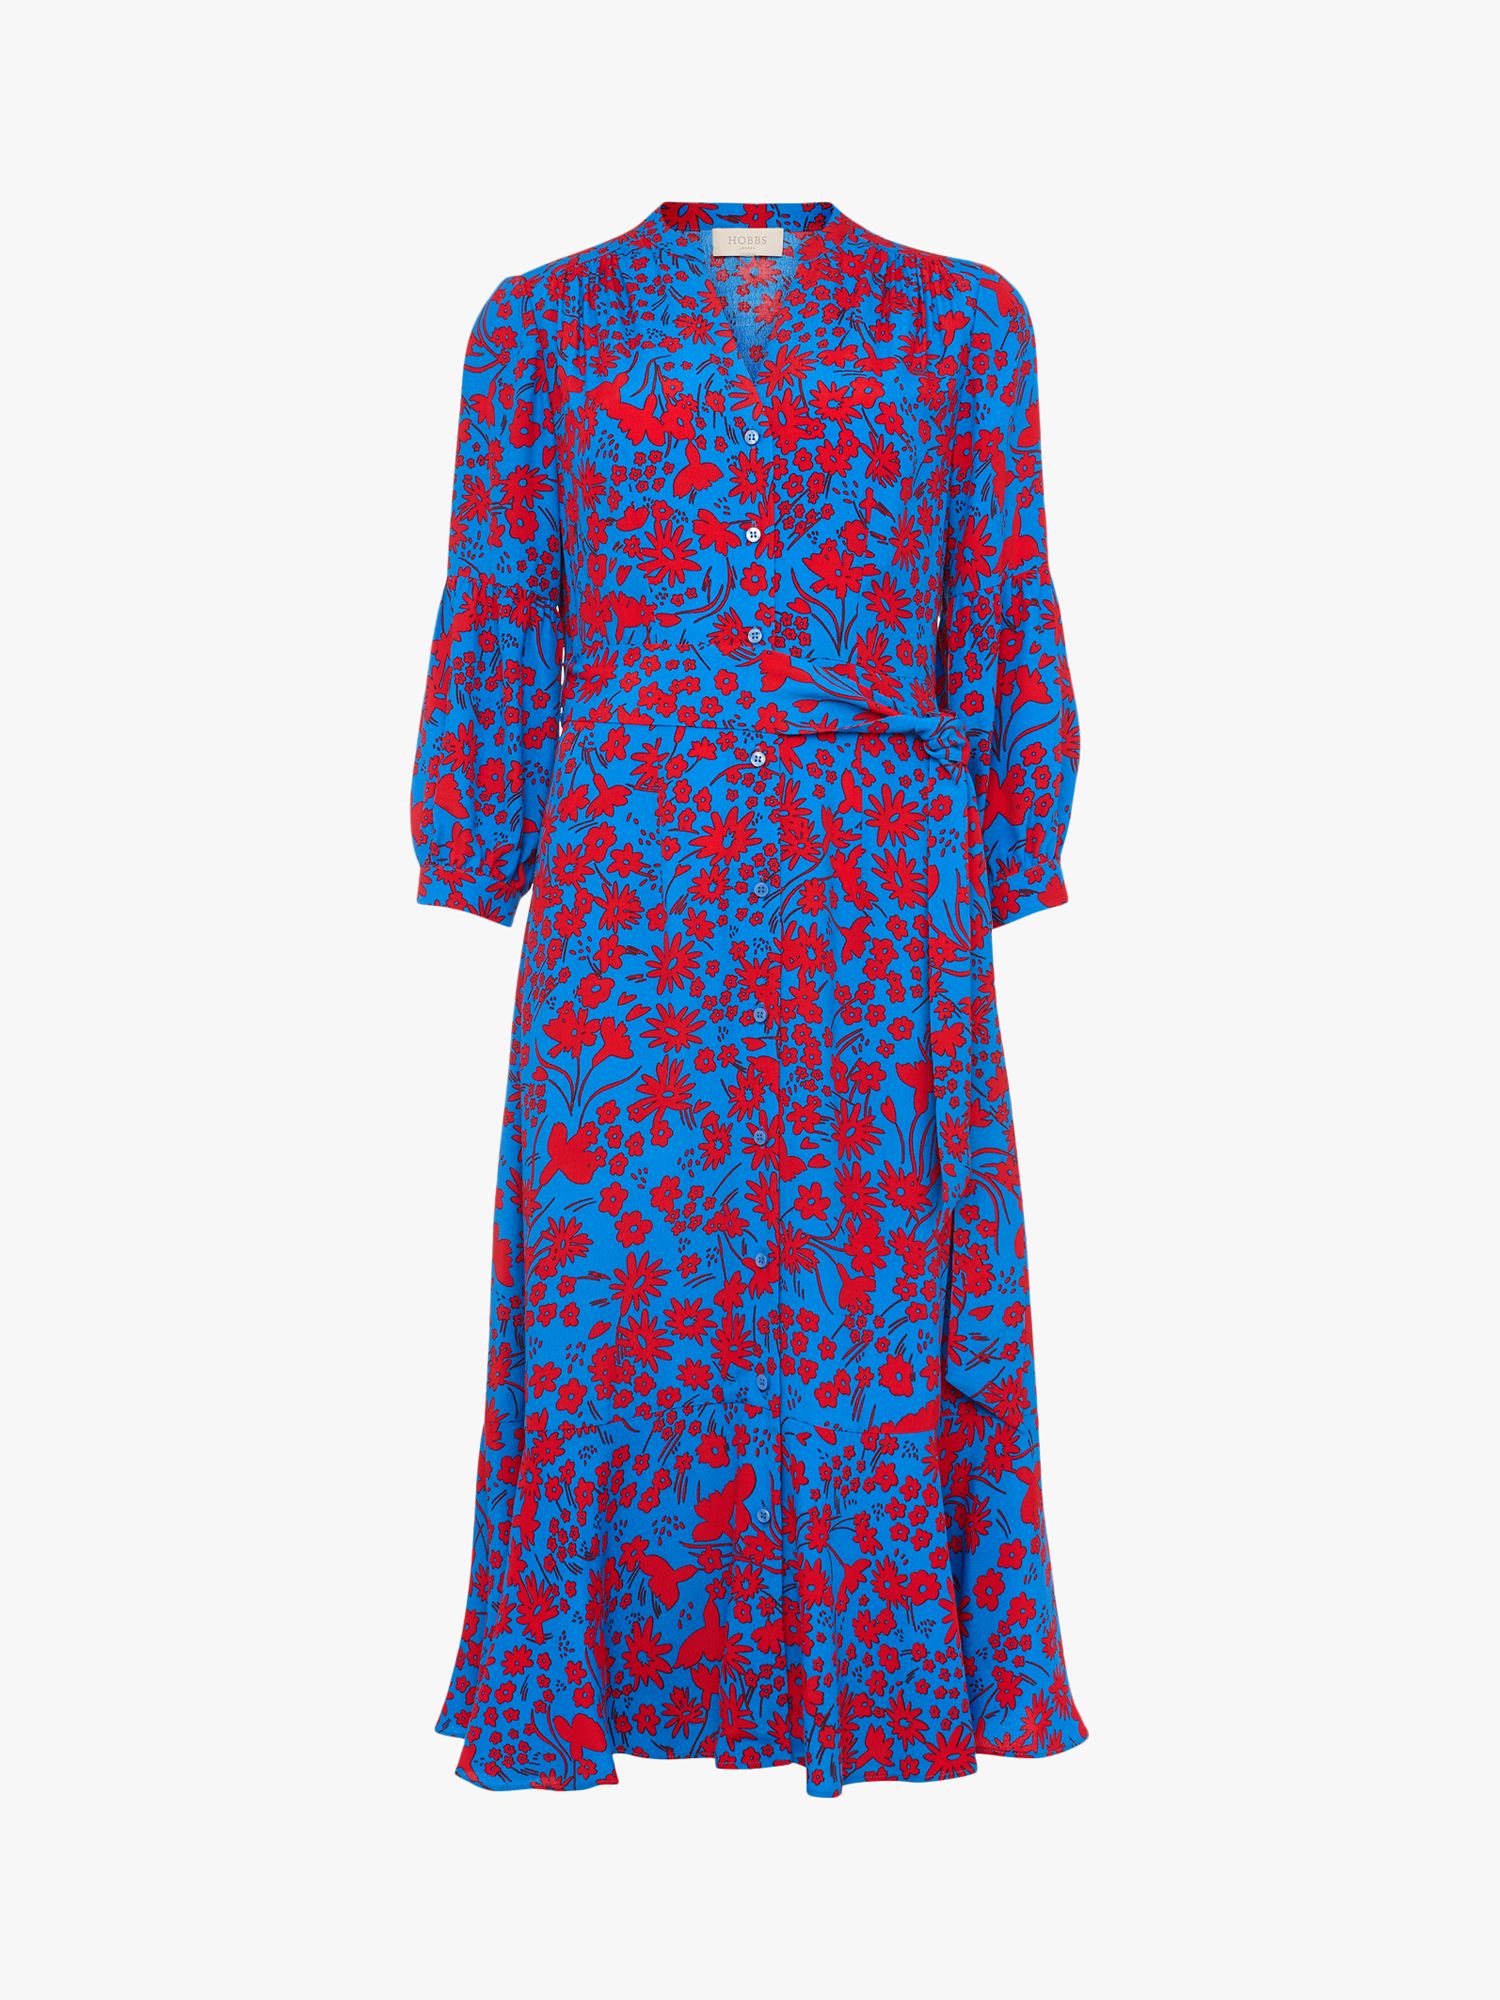 Hobbs Carla Floral Print Midi Dress, Red/Azure Blue